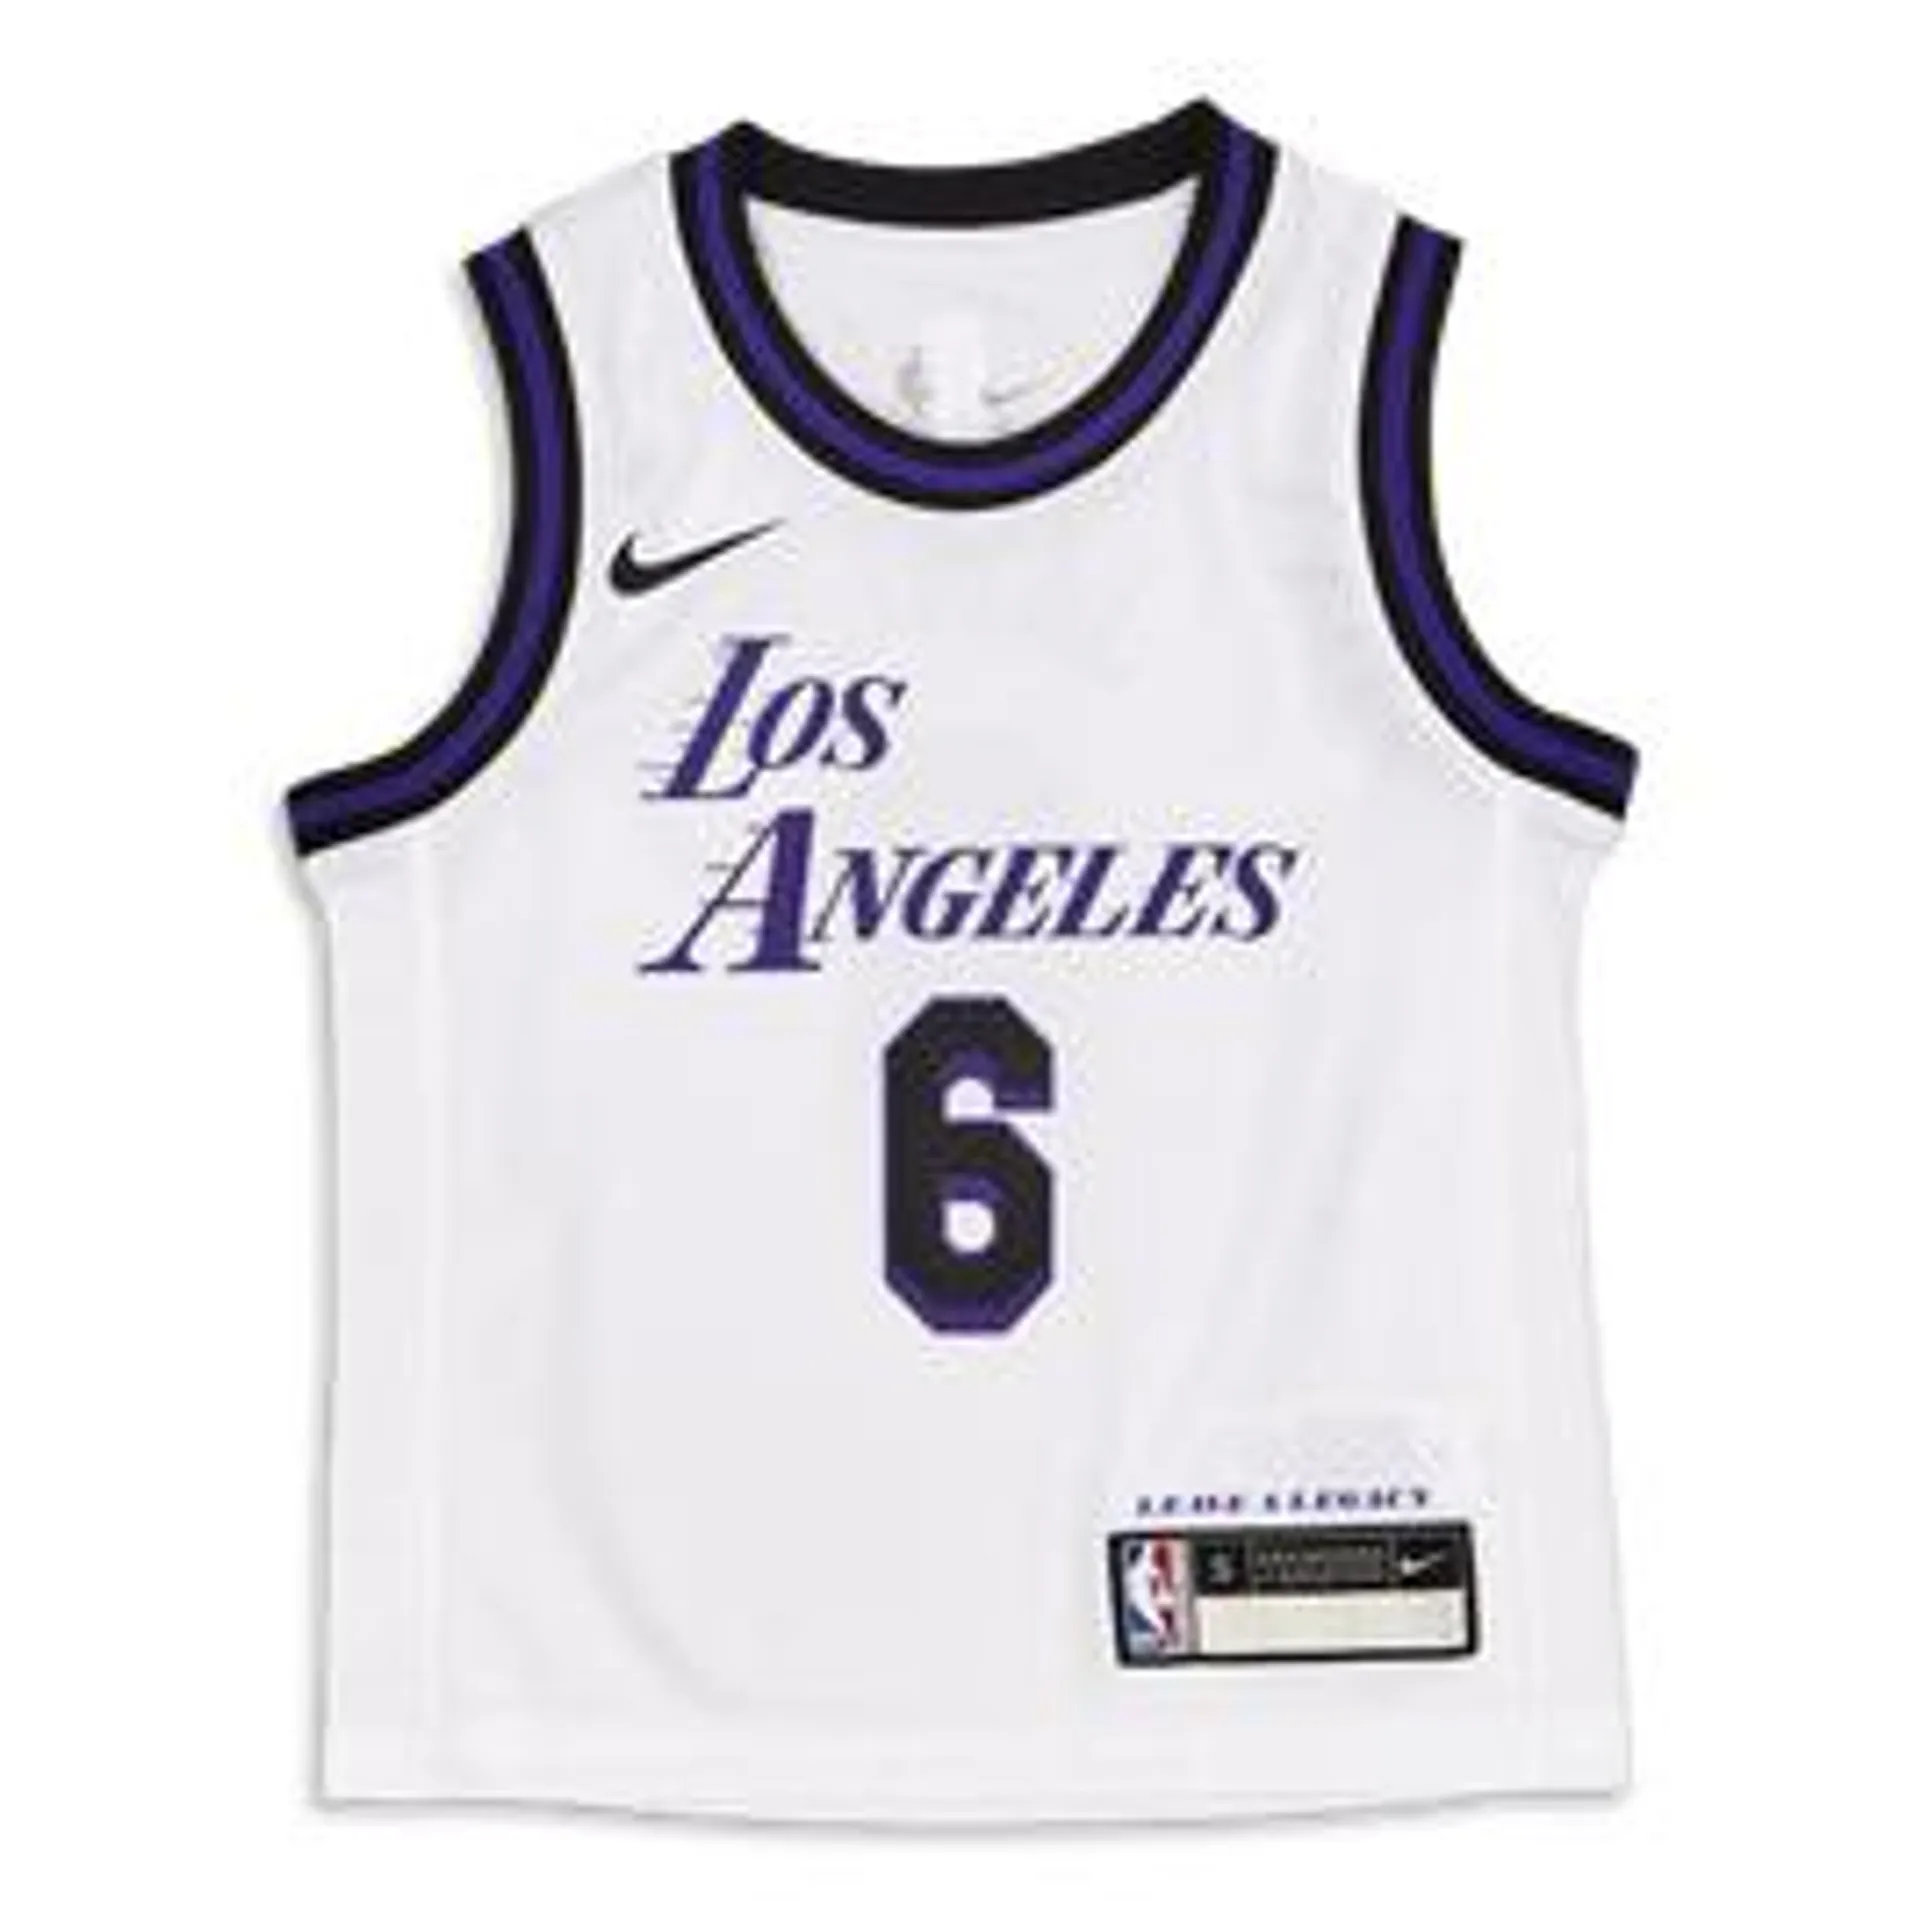 Nike Nba L.James Lakers Swingman